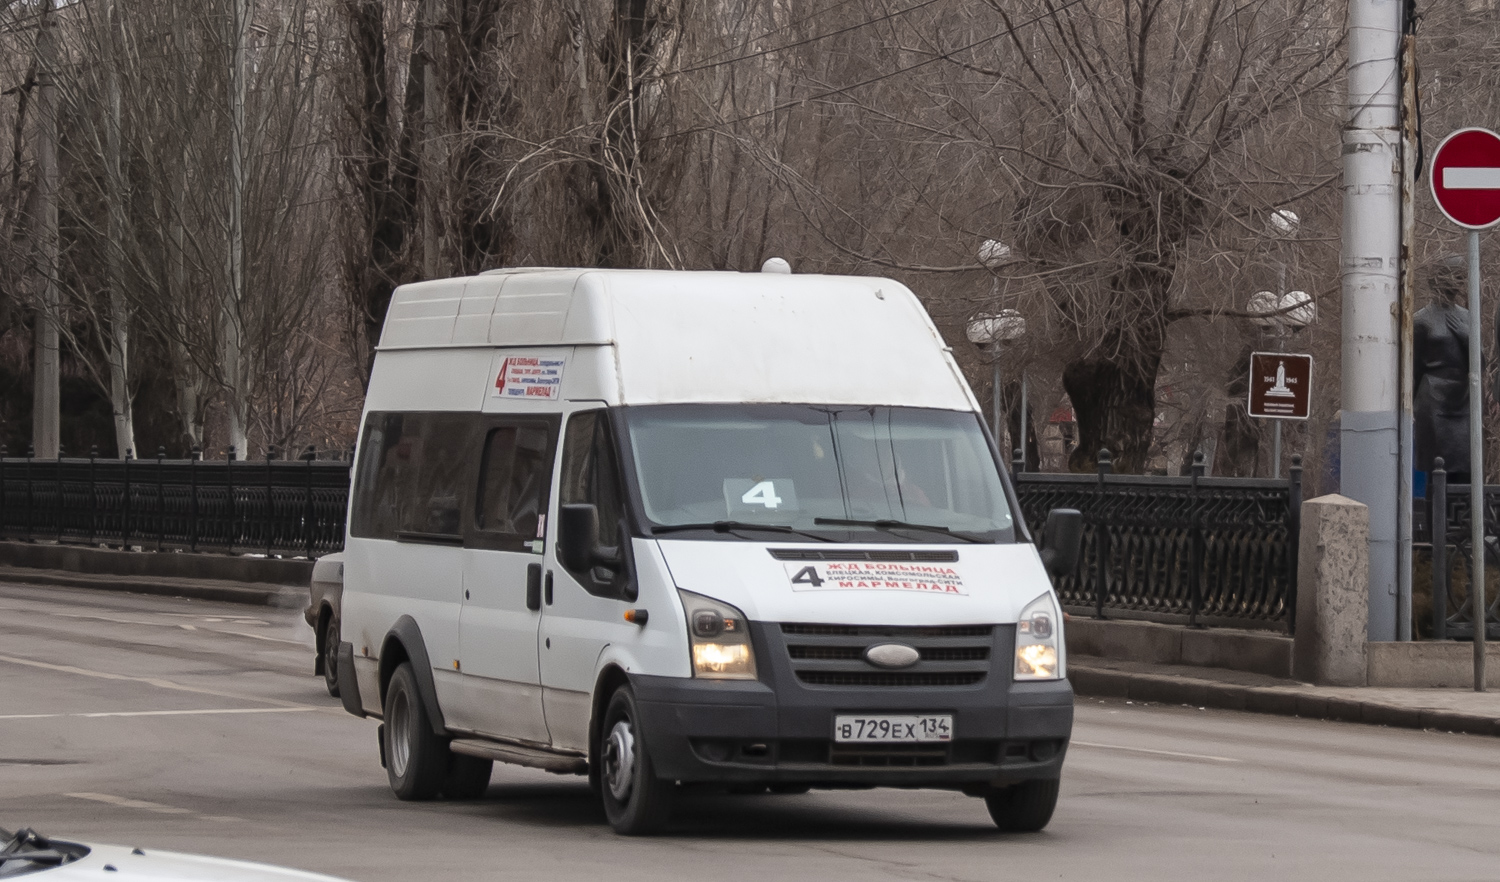 Volgogrado sritis, GolAZ-3030 (Ford Transit) Nr. В 729 ЕХ 134